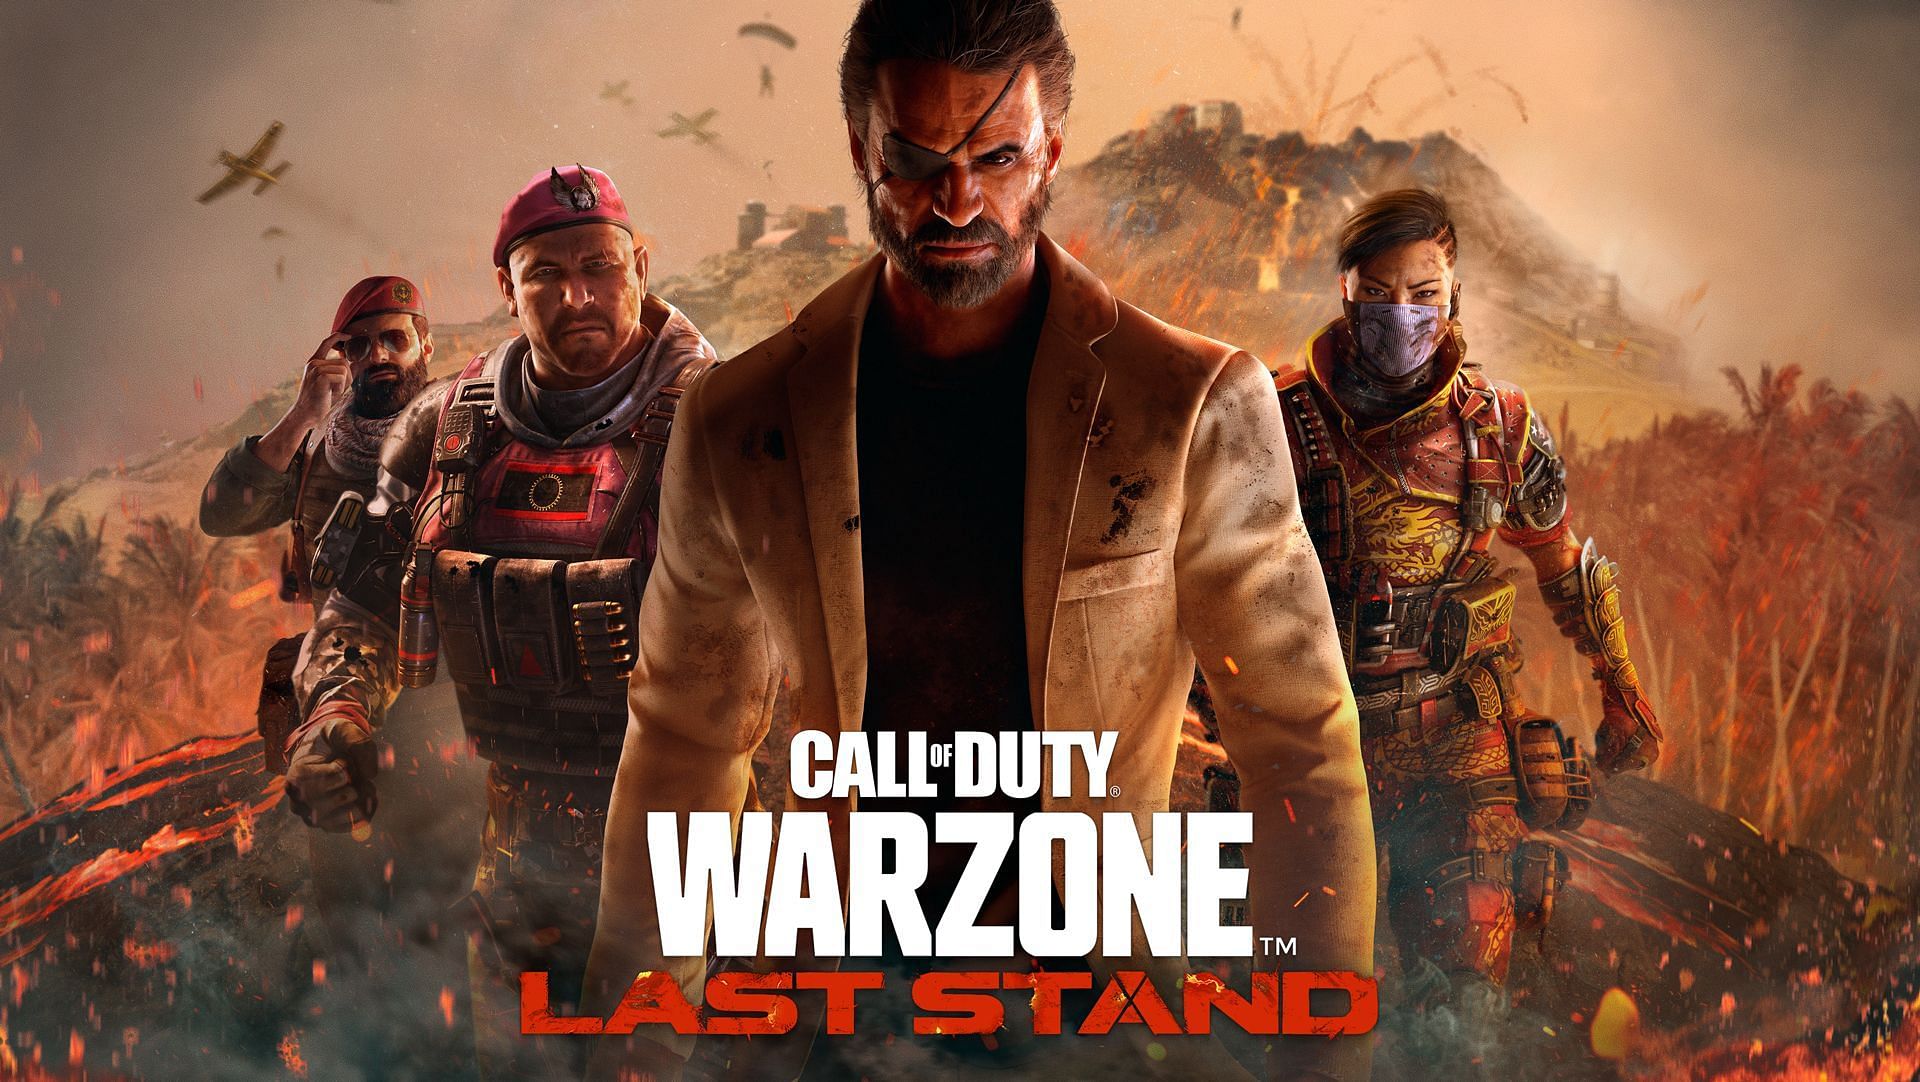 Call of Duty: Warzone Season 5 Last Stand (Image via Activision)